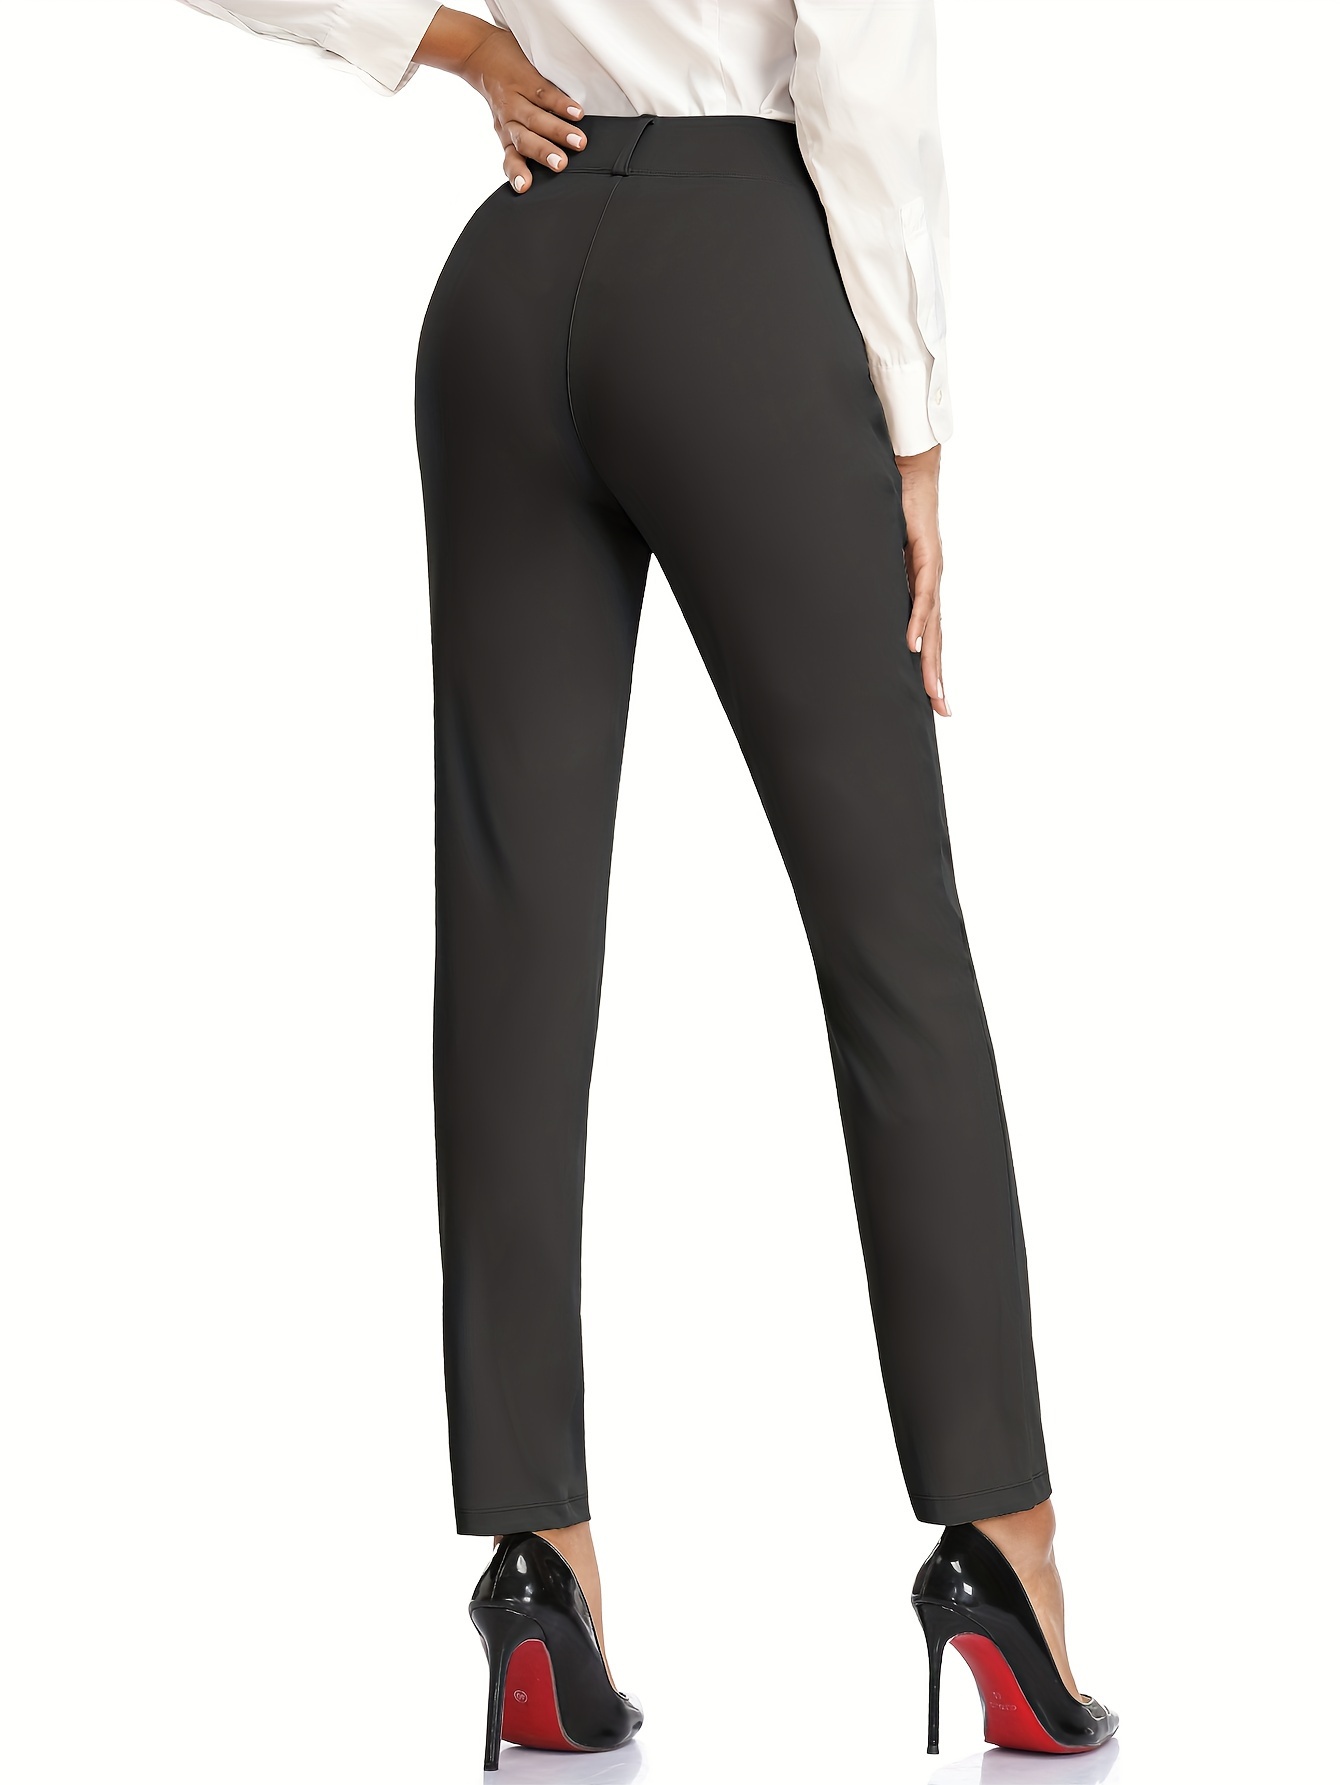 HISKYWIN Womens Dress Pants Stretch Work Office Business Slacks Comfy Yoga  Golf Pants with Pockets